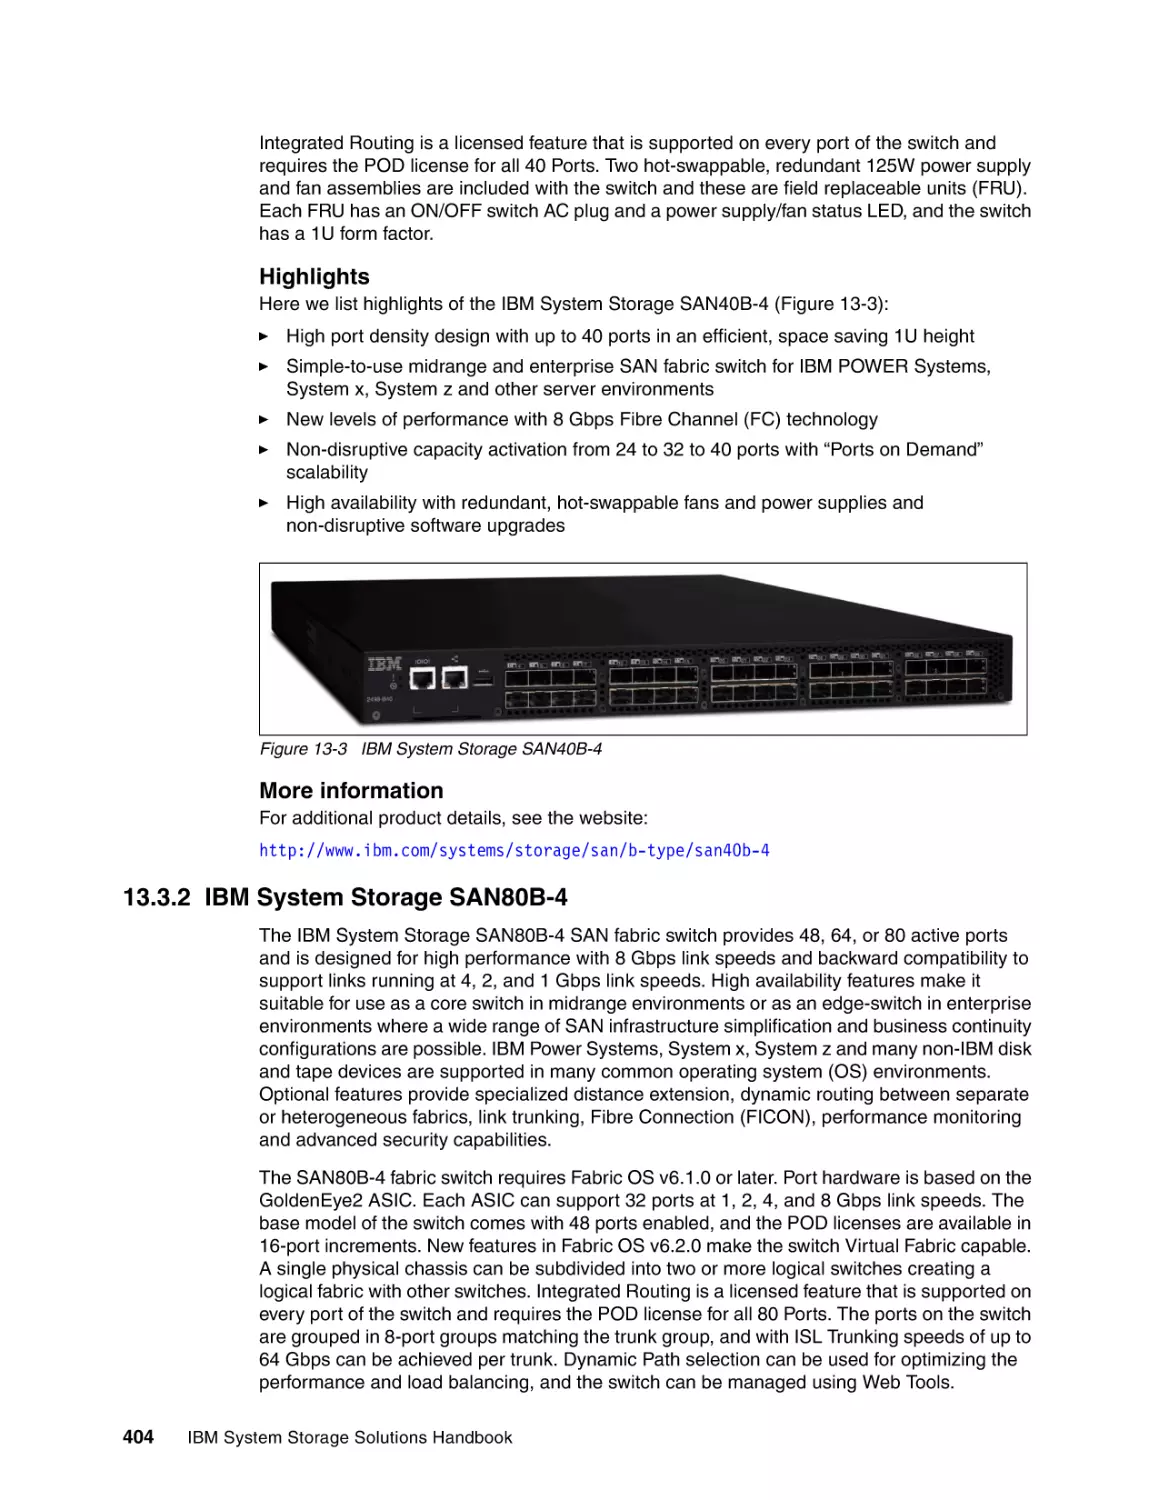 13.3.2 IBM System Storage SAN80B-4